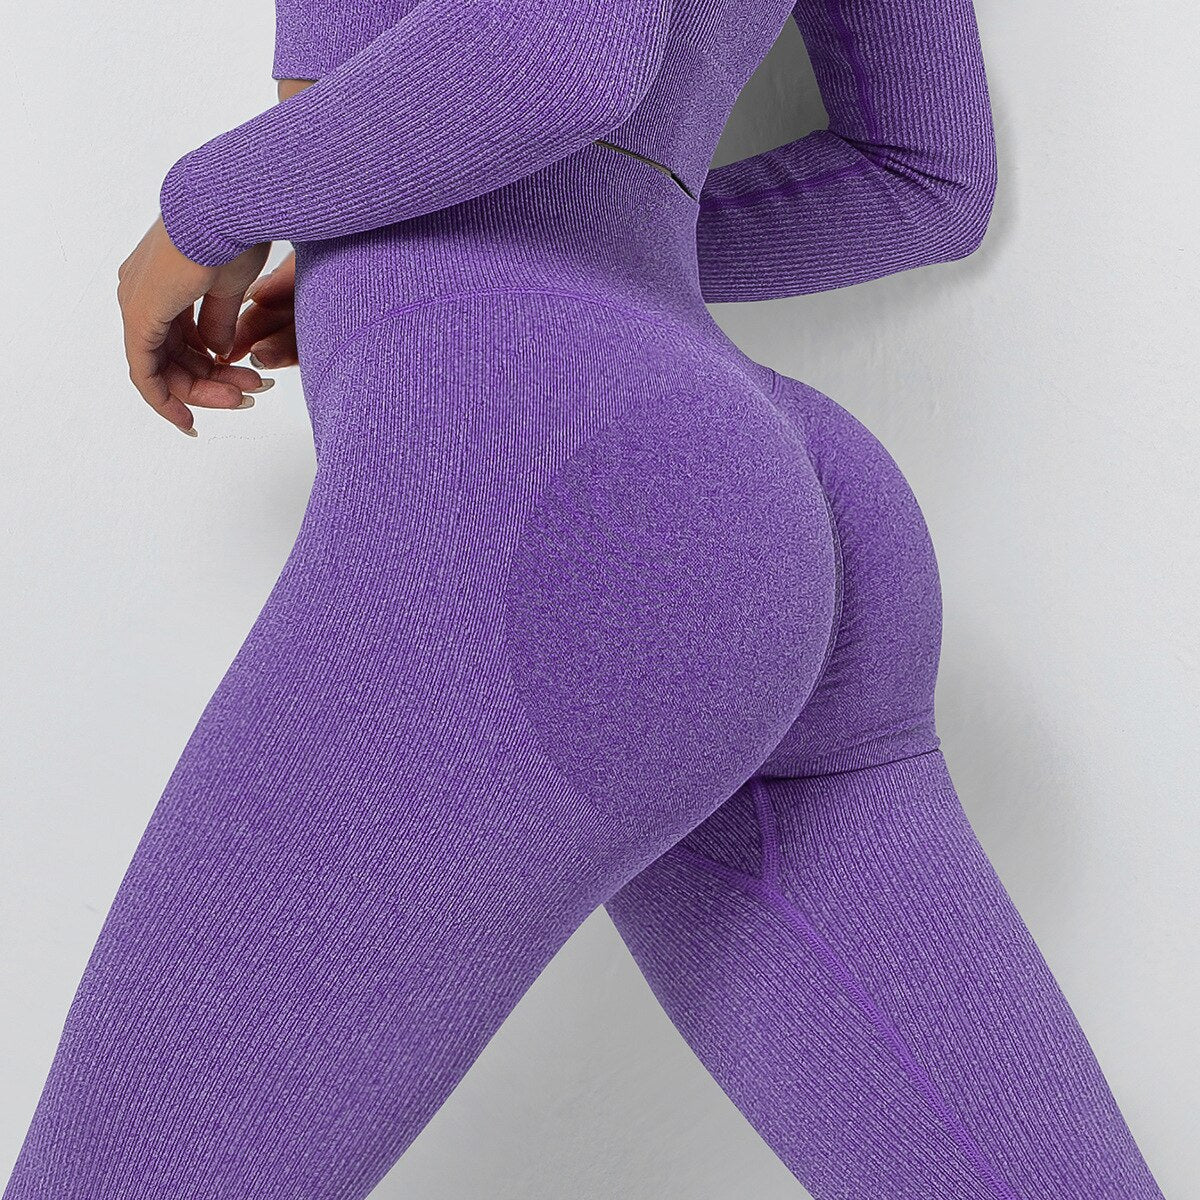 allyn-lewis-winter-workout-planet-fitness-purple-yoga-pants-lr-3